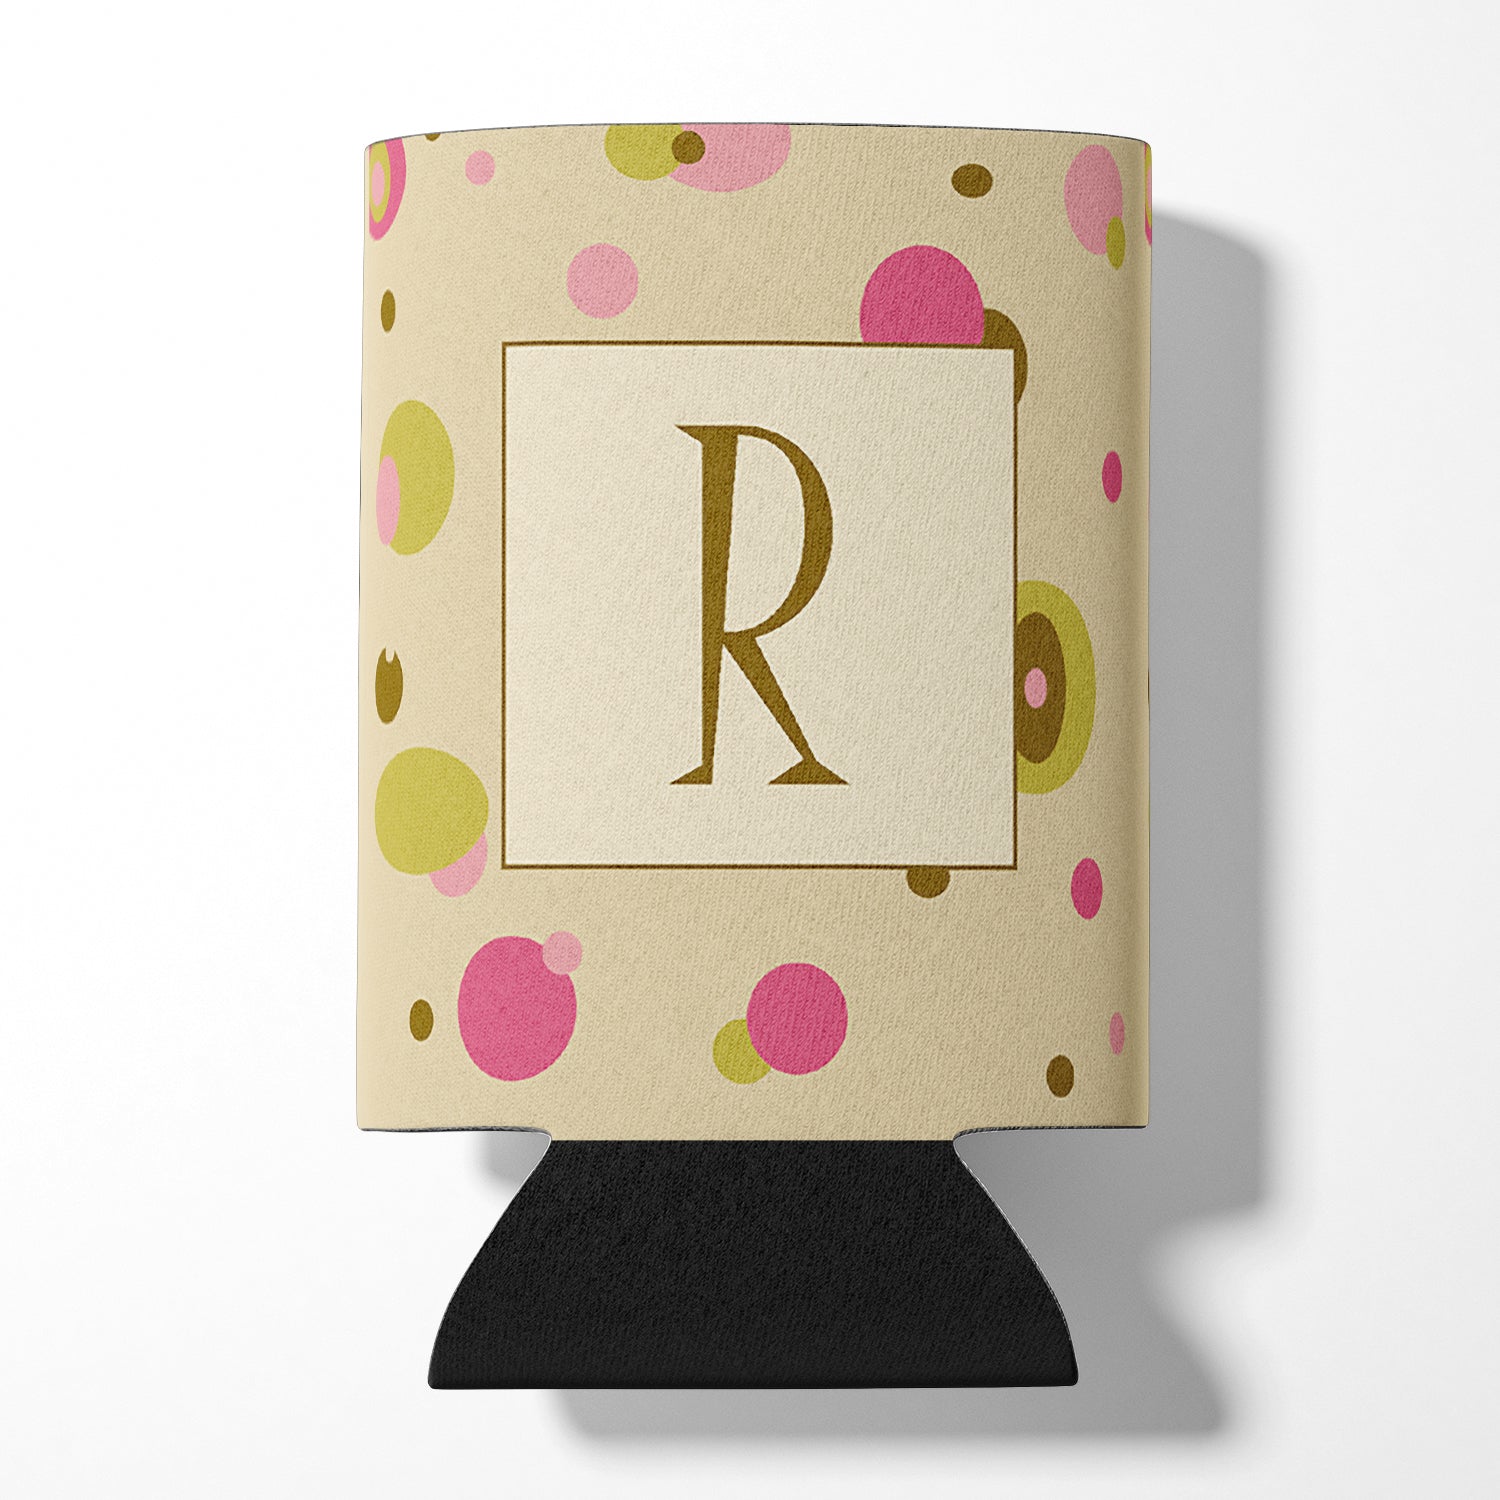 Letter R Initial Monogram - Tan Dots Can or Bottle Beverage Insulator Hugger.